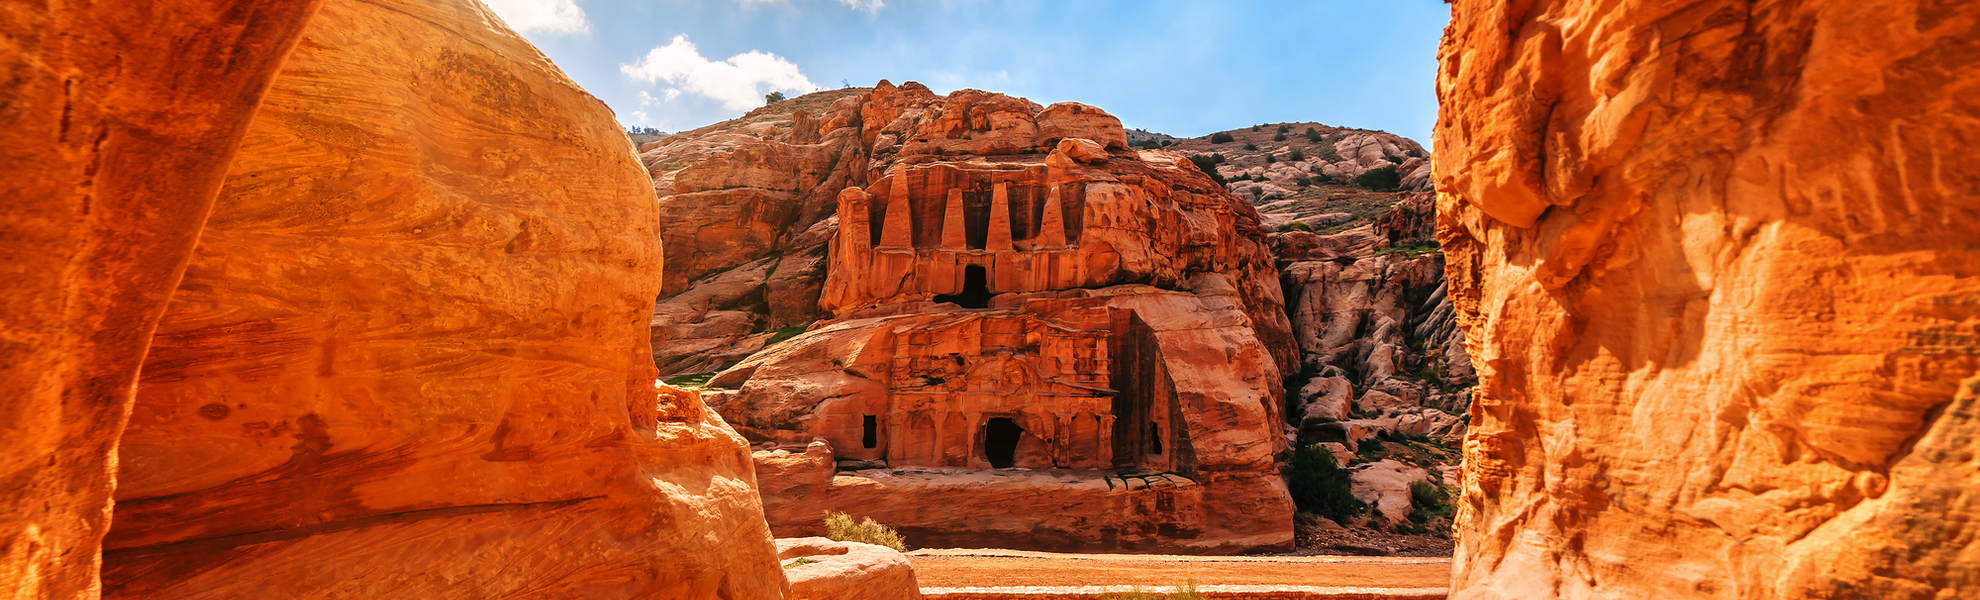 Ruinen von Petra in Jordanien